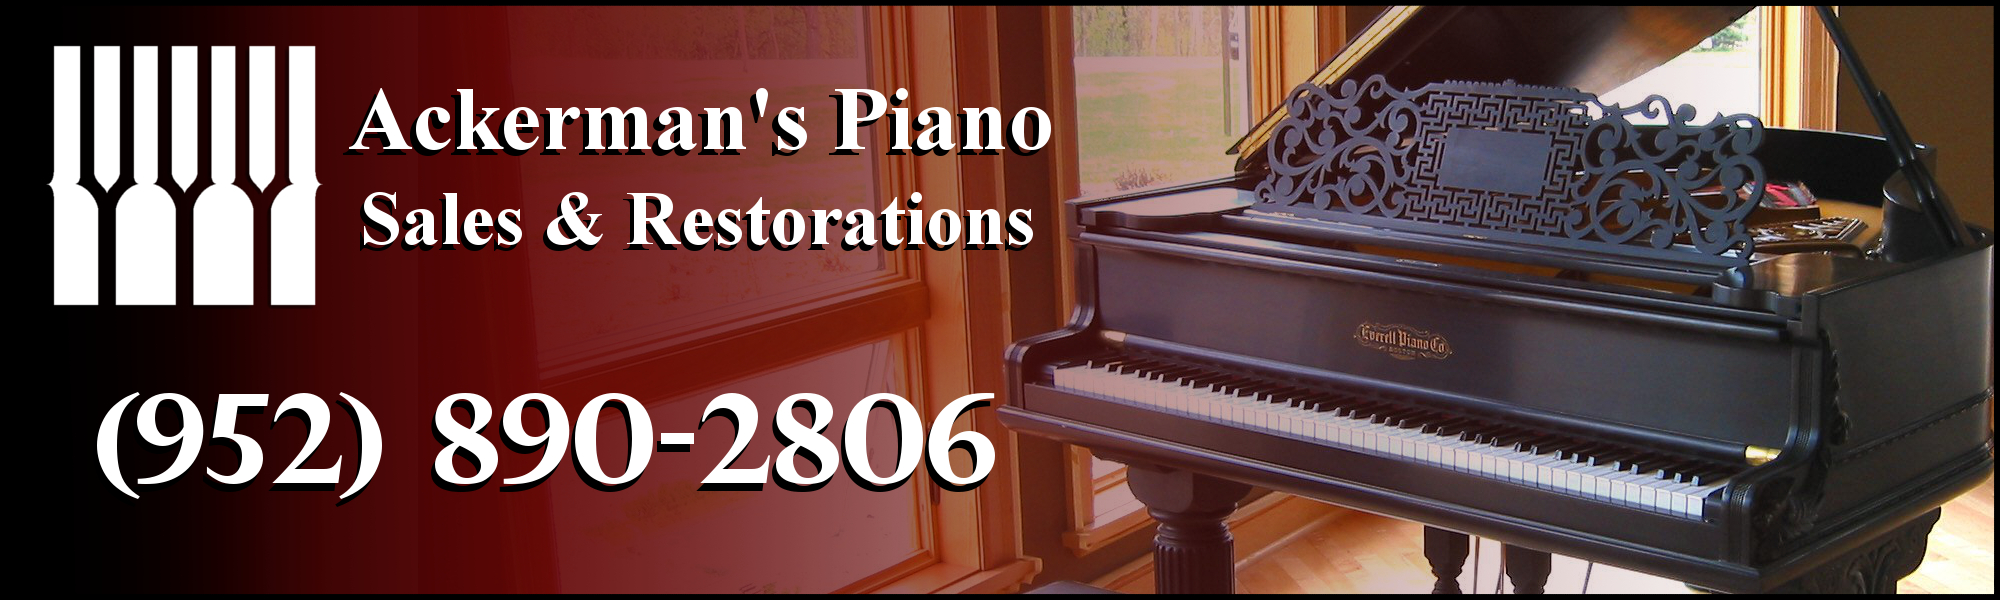 Ackerman's Piano Sales and Restorations    952-890-2806